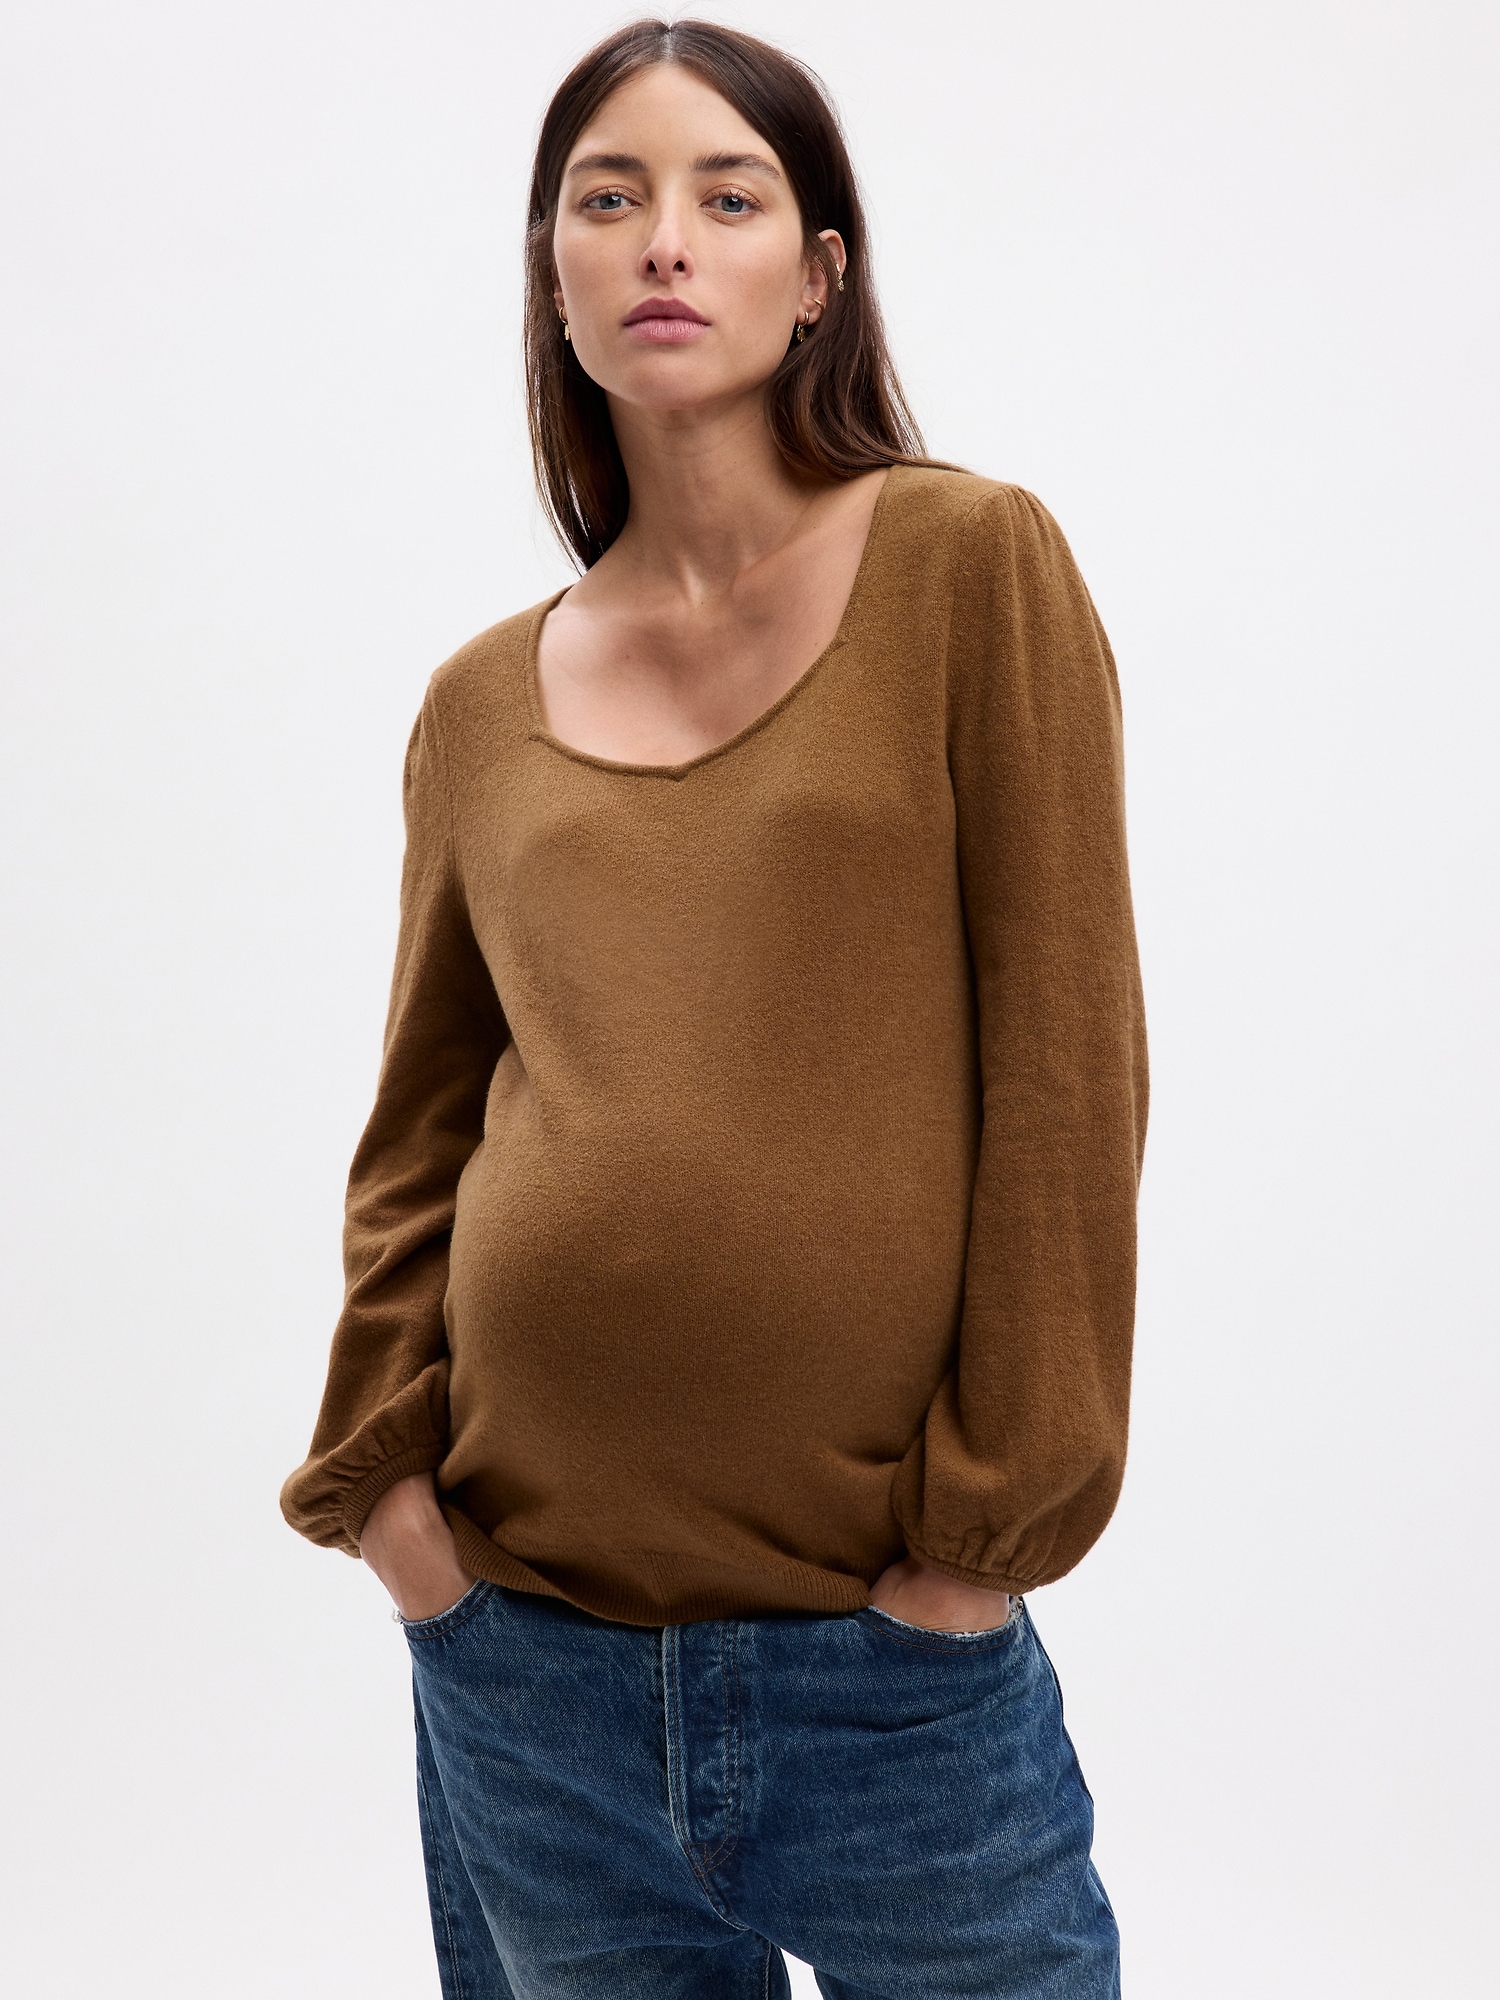 Gap Maternity Sweetheart Sweater In Cocoa Powder Brown